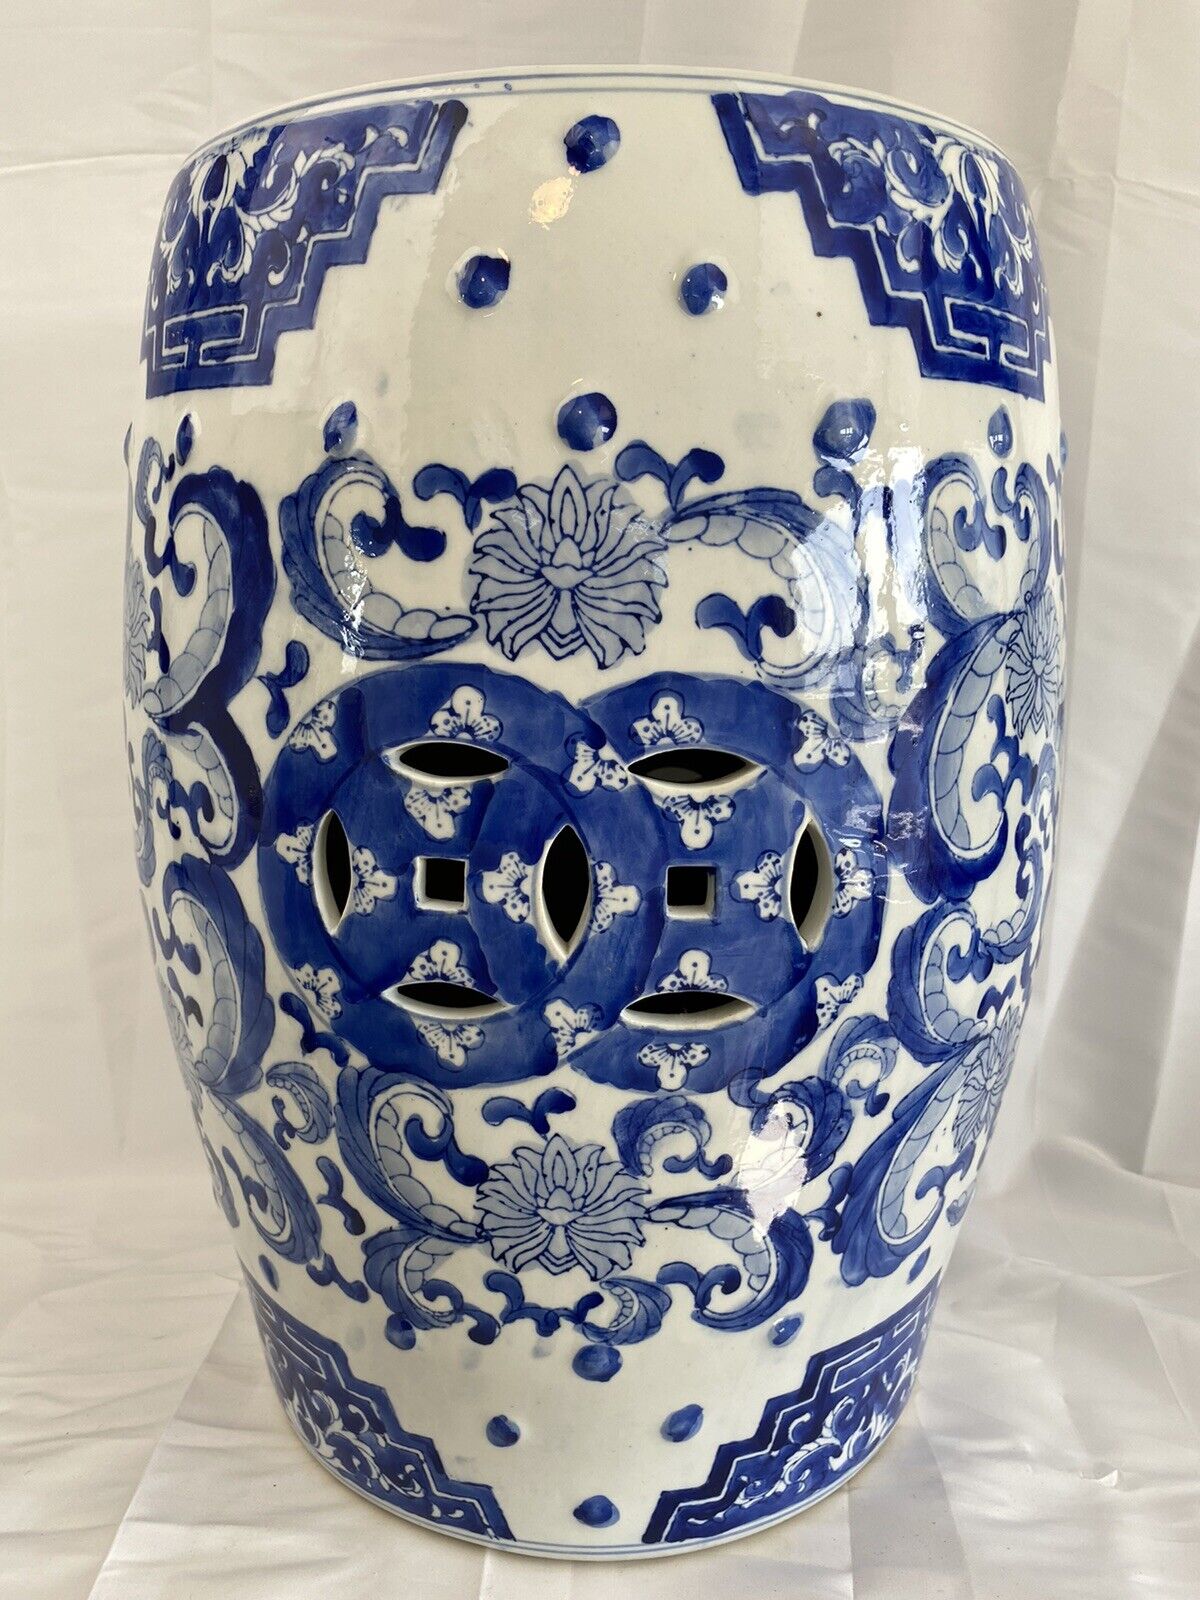 Chinese Chinoiserie Blue And White Ceramic Garden Seat 20th Century 18.5”H x 14”